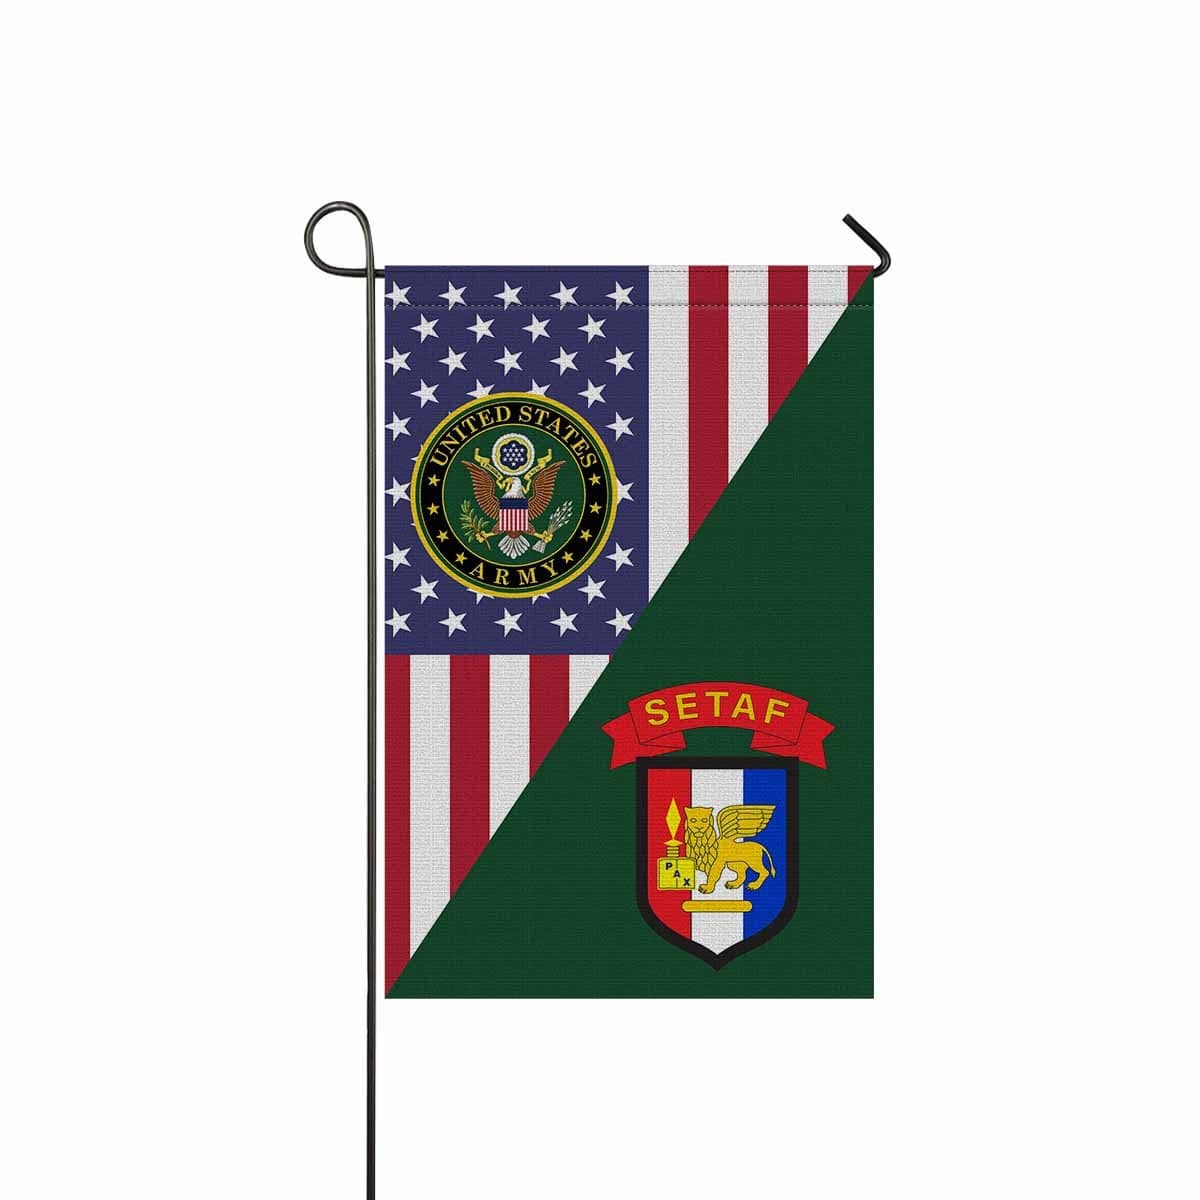 US ARMY USARAF-SETAF COMBAT SERVICE ID BADGE Garden Flag/Yard Flag 12 inches x 18 inches Twin-Side Printing-GDFlag-Army-CSIB-Veterans Nation